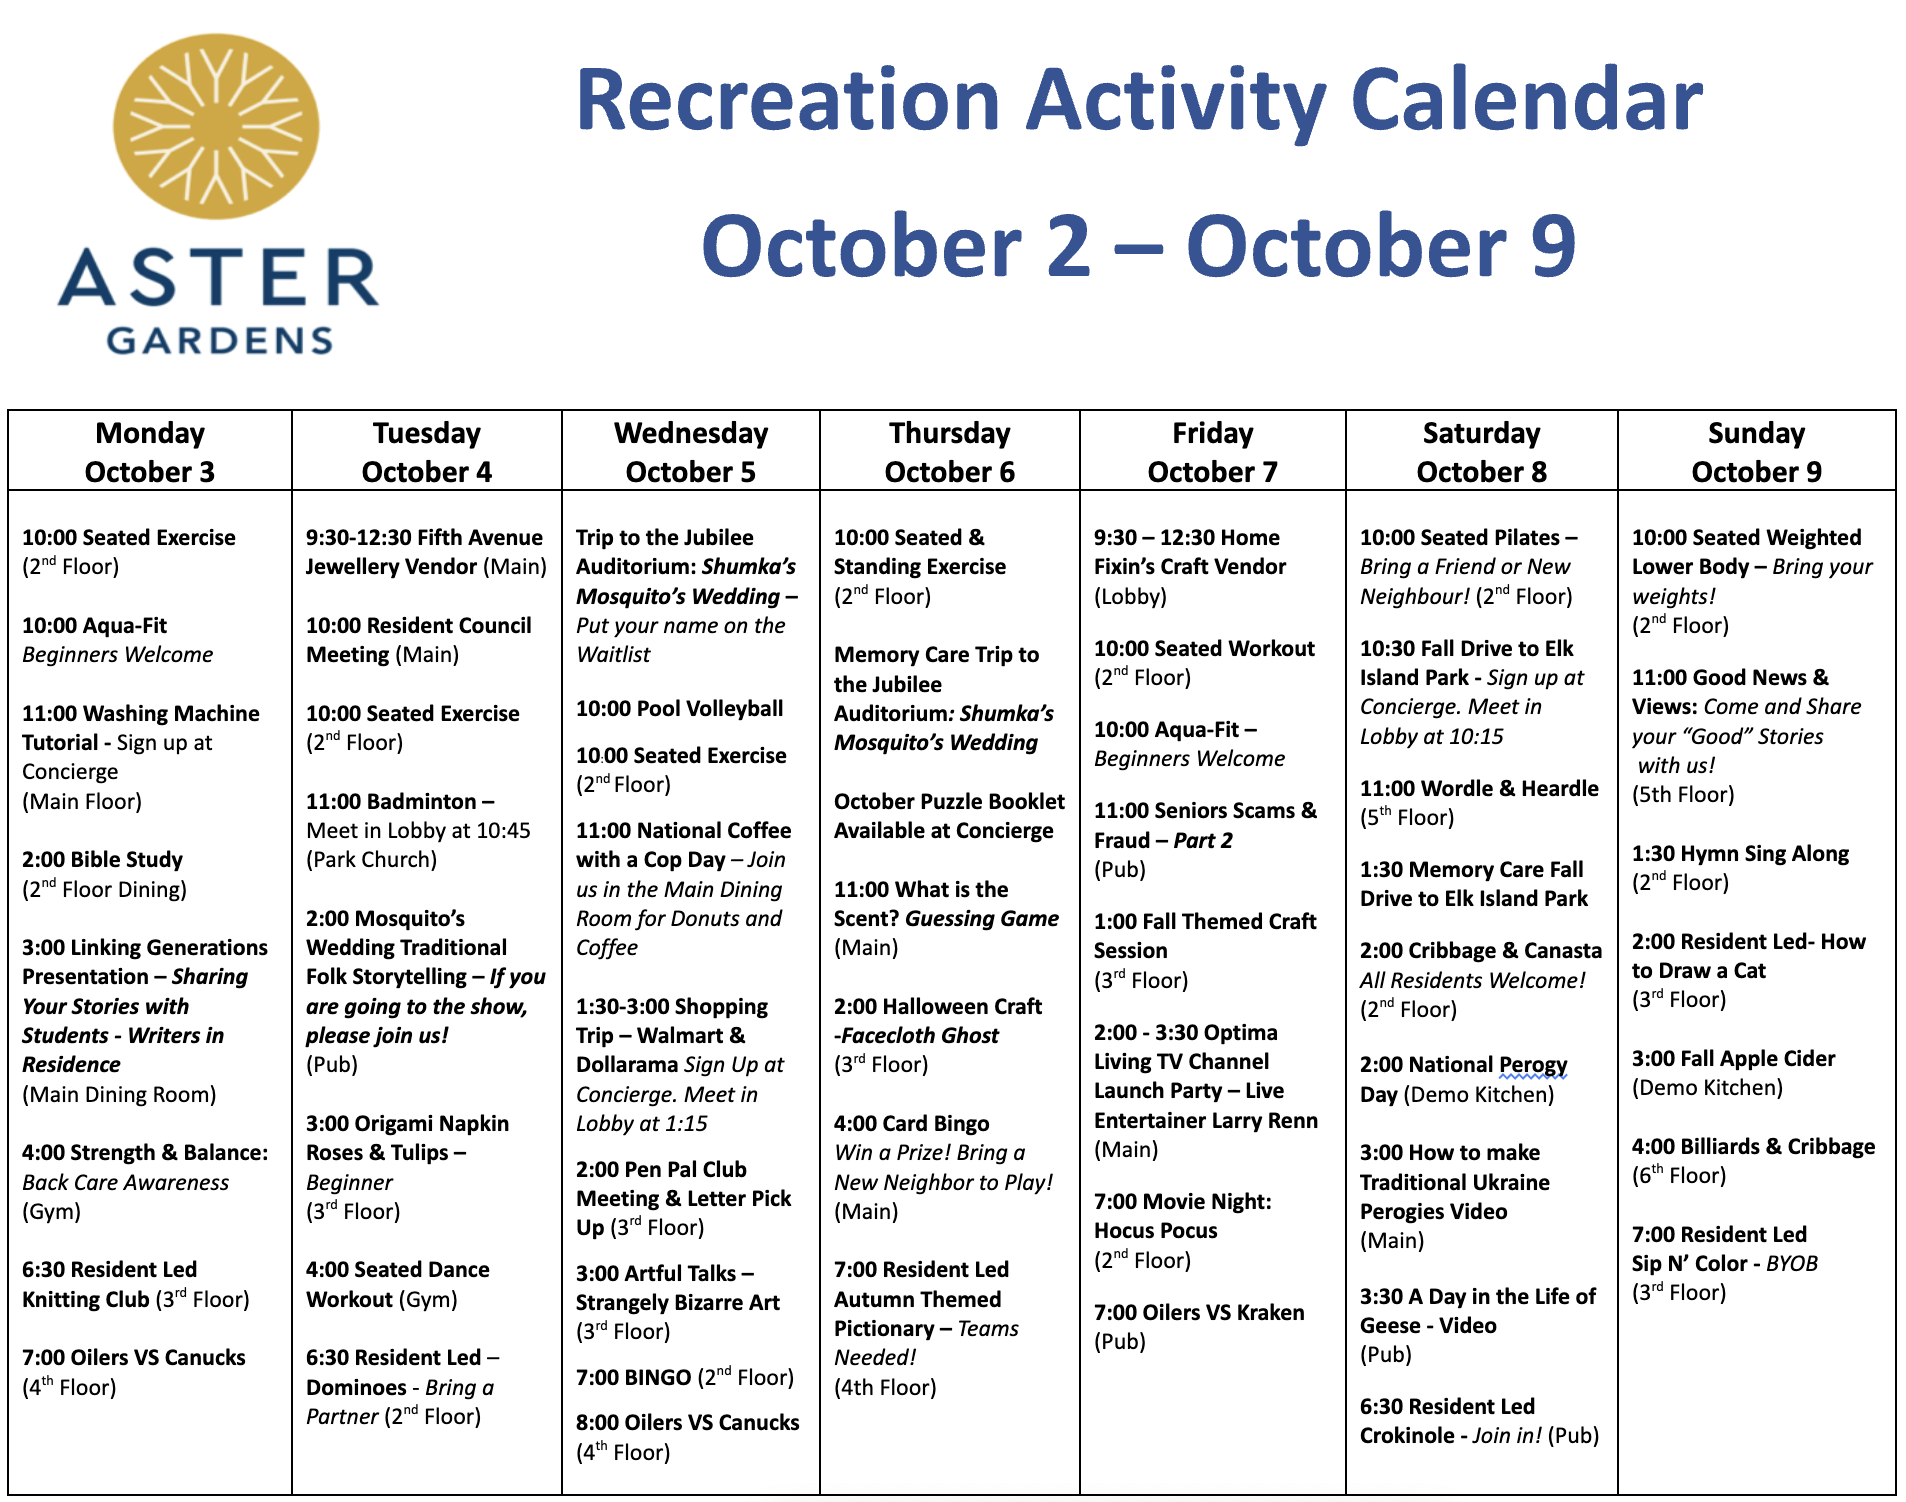 Aster Gardens October 2 - 9 events calendar